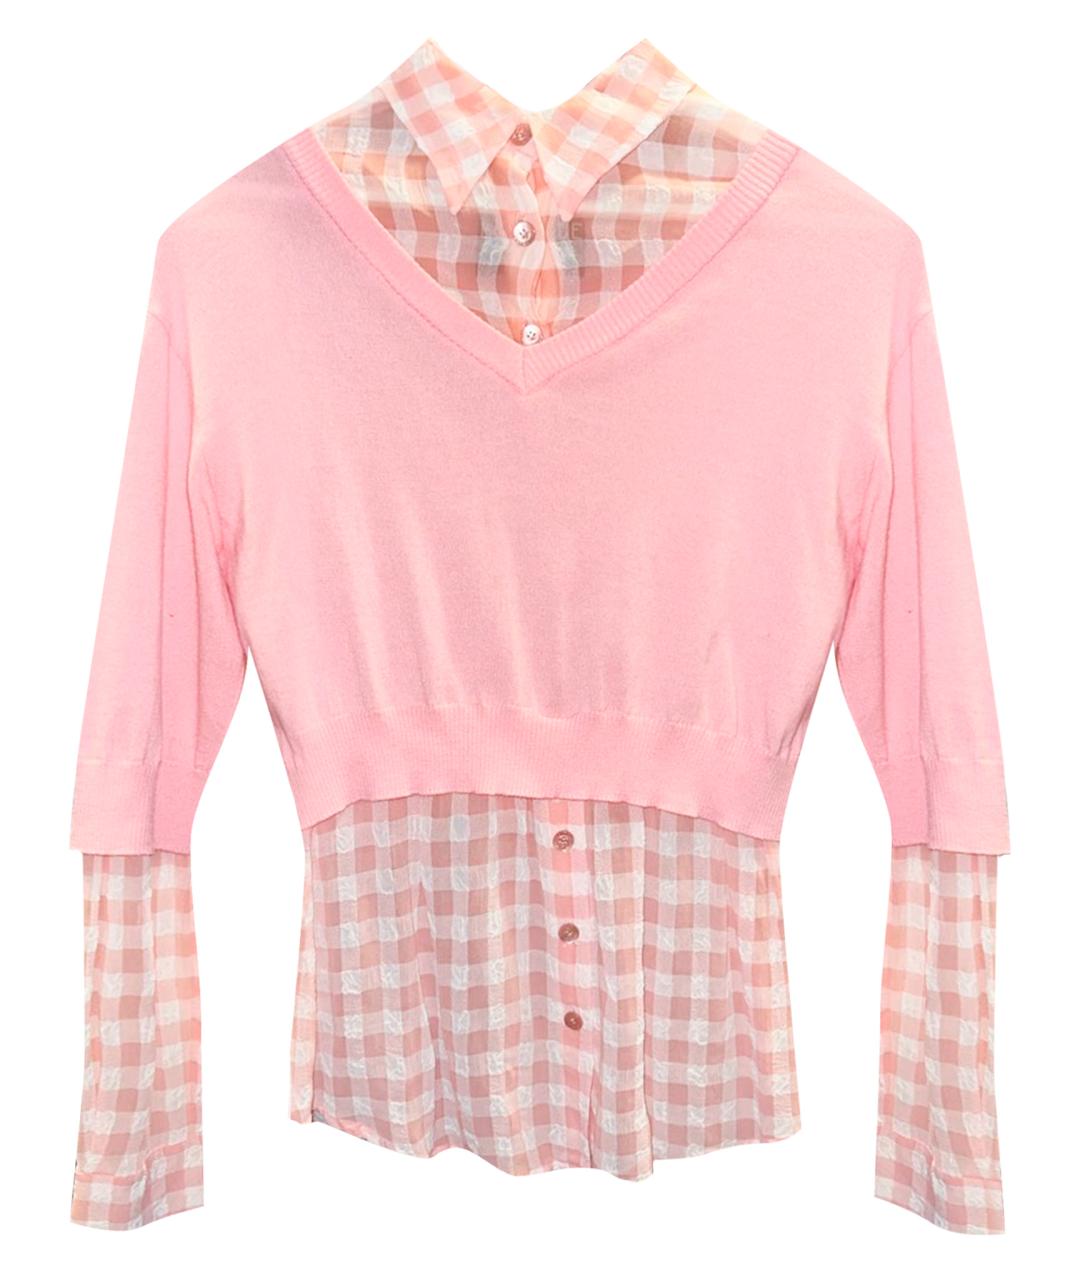 BOUTIQUE MOSCHINO Розовый шерстяной джемпер / свитер, фото 1